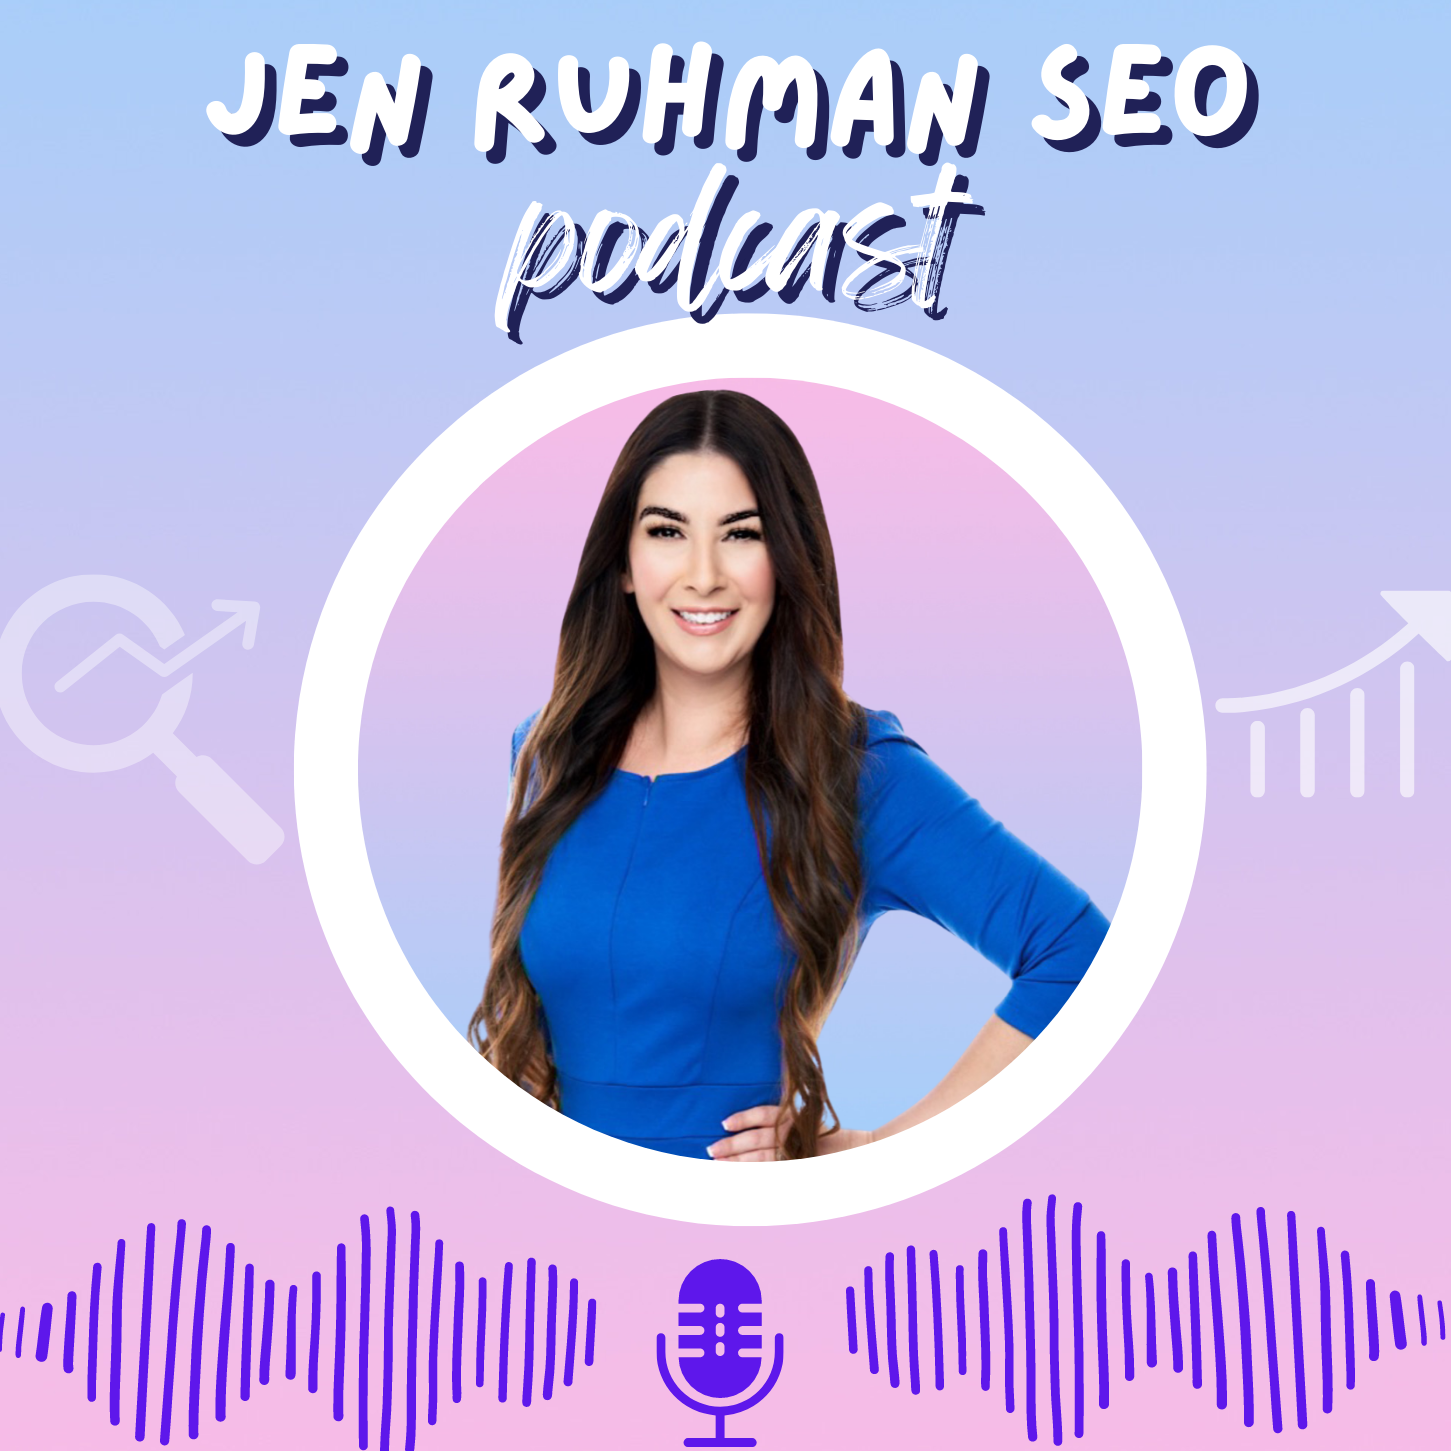 Jen Ruhman SEO podcast